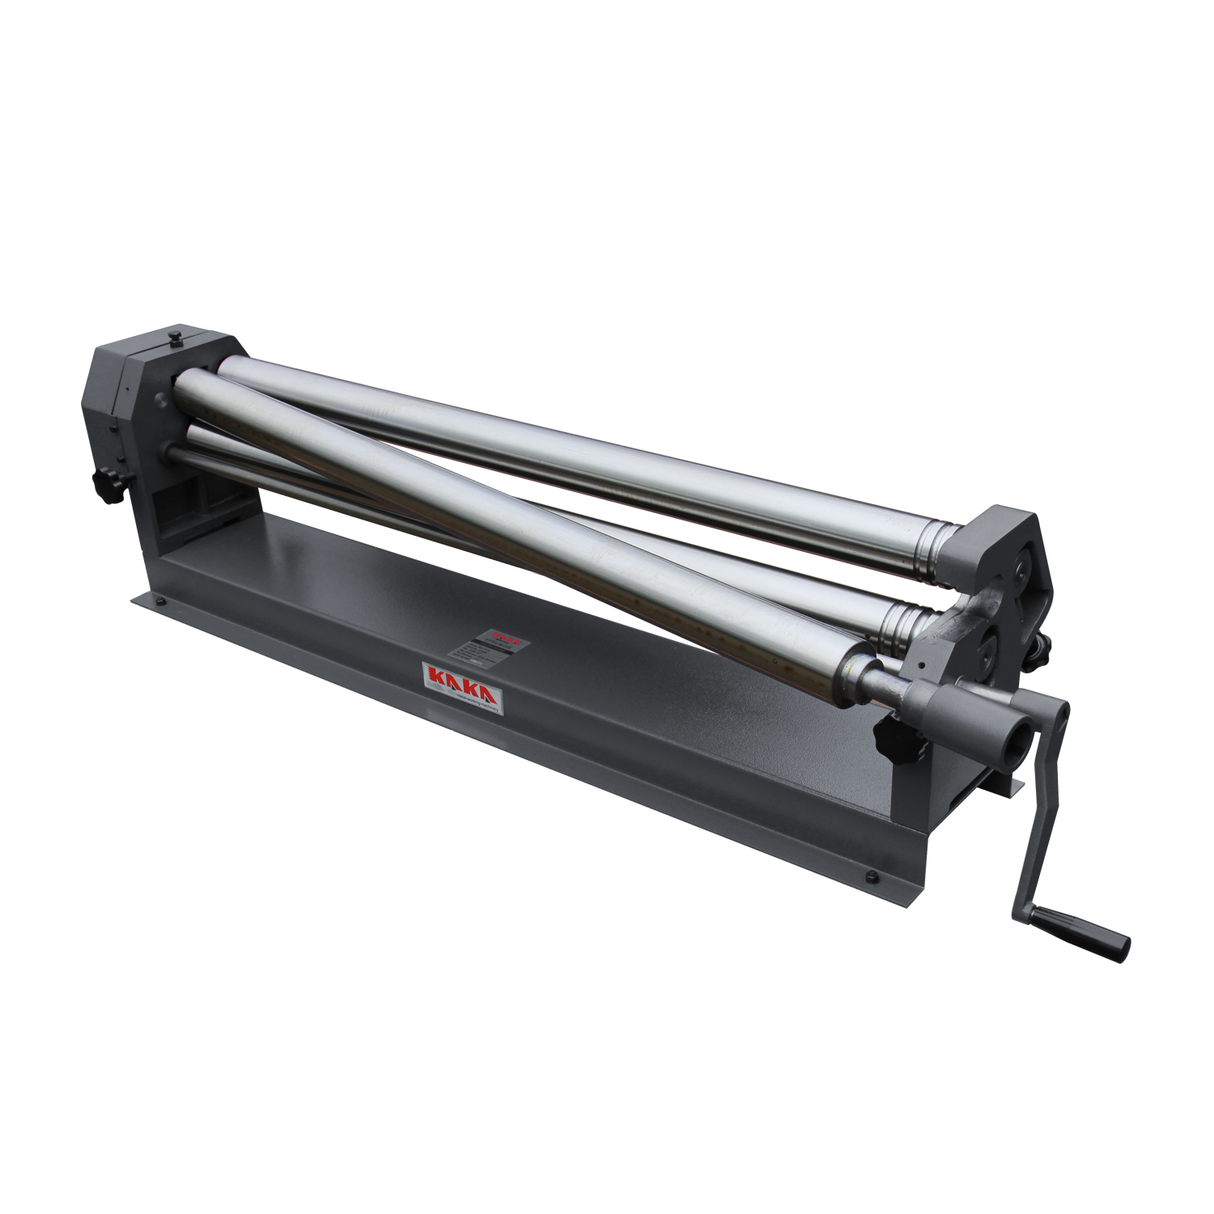 KANG Industrial W01-4022 Slip Roll Machine, 1000mm Width Plate Roll Bending Machine